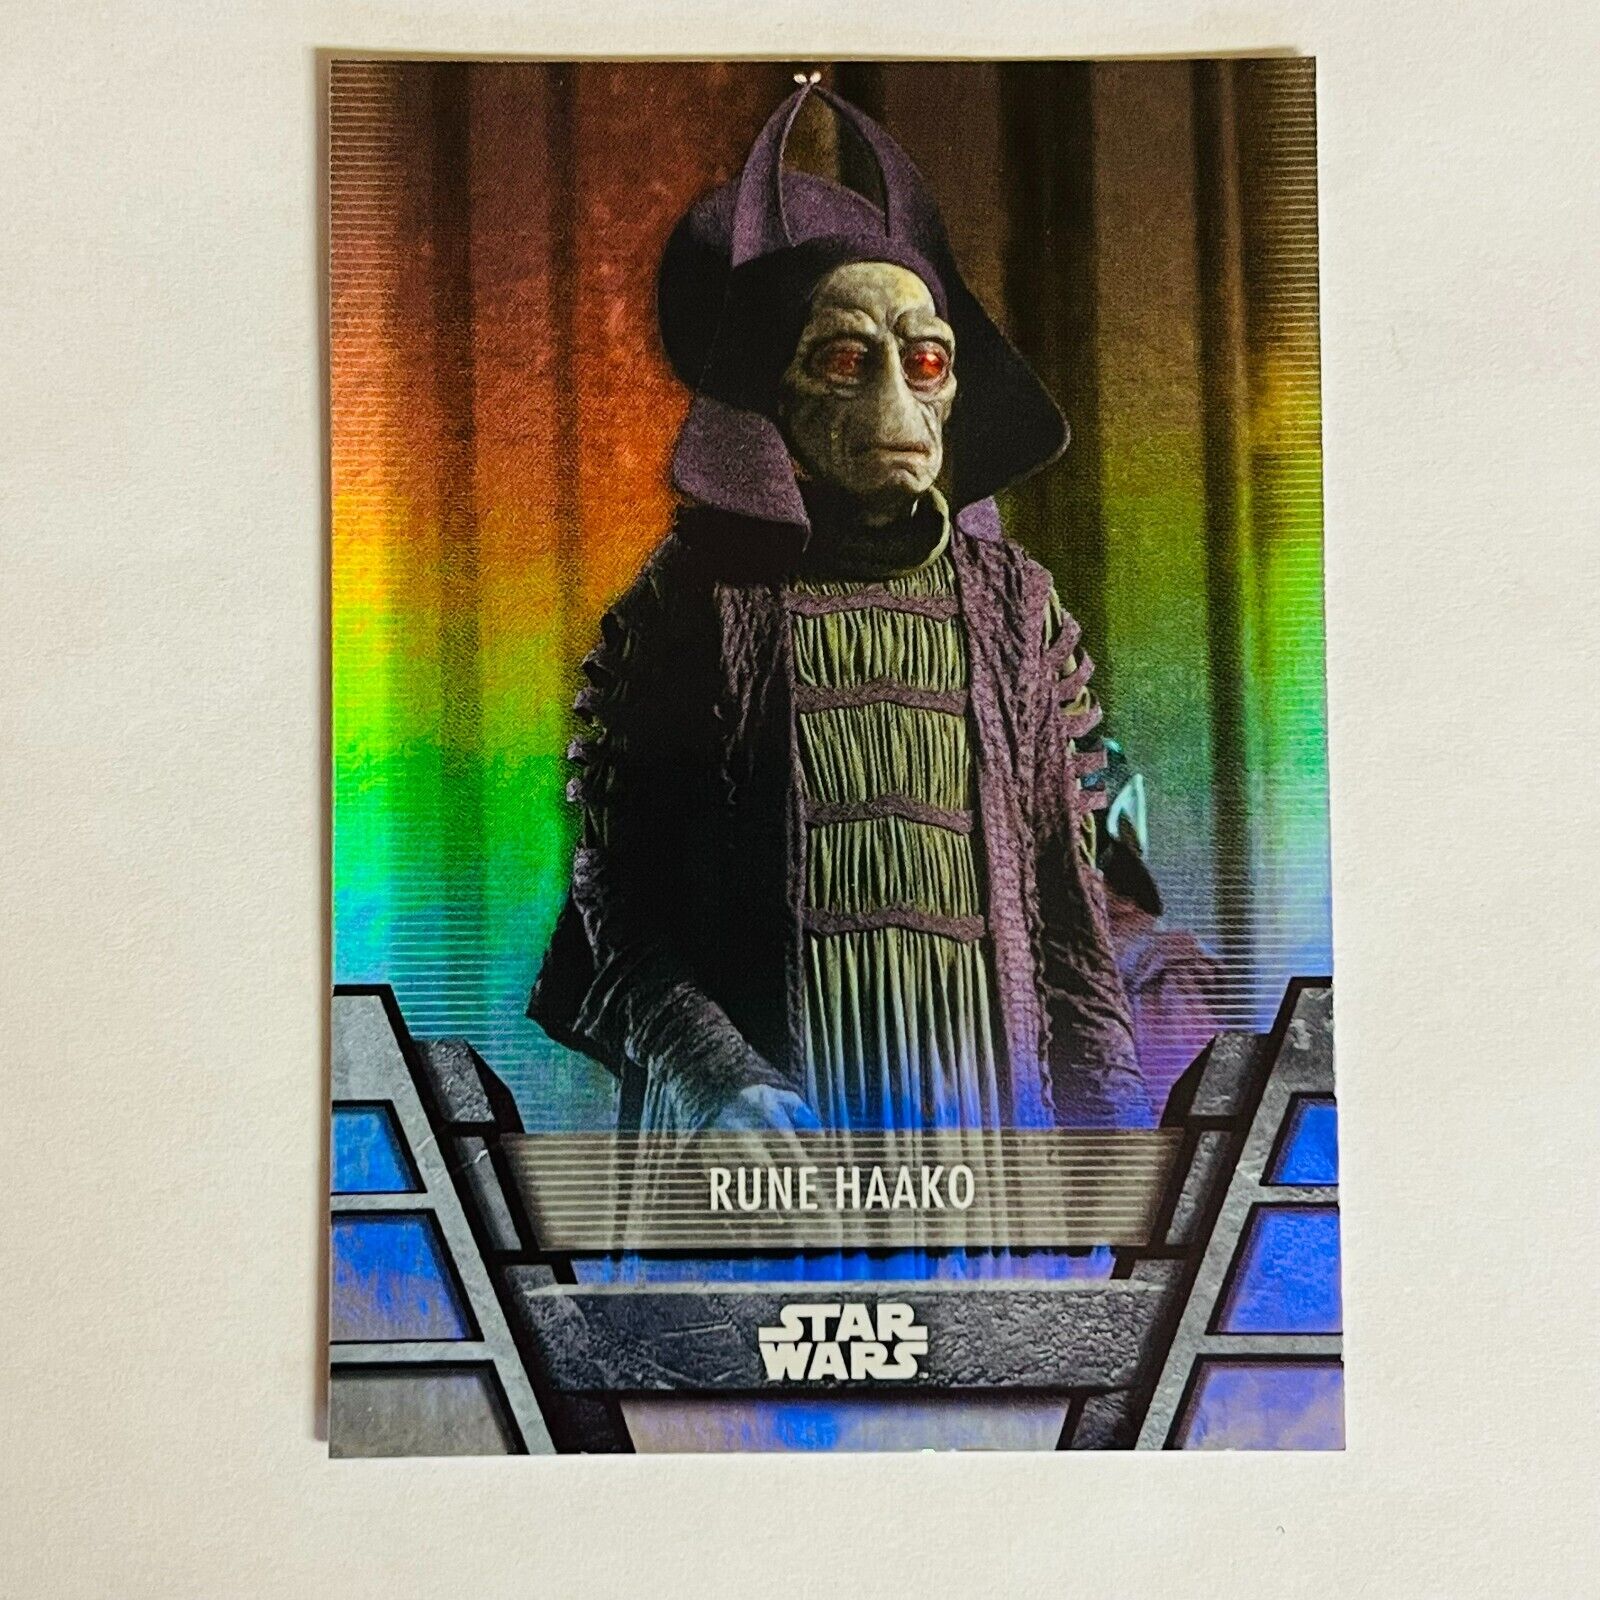 2020 Topps Star Wars Holocron Foil Base Card Sep-2 Rune Haako